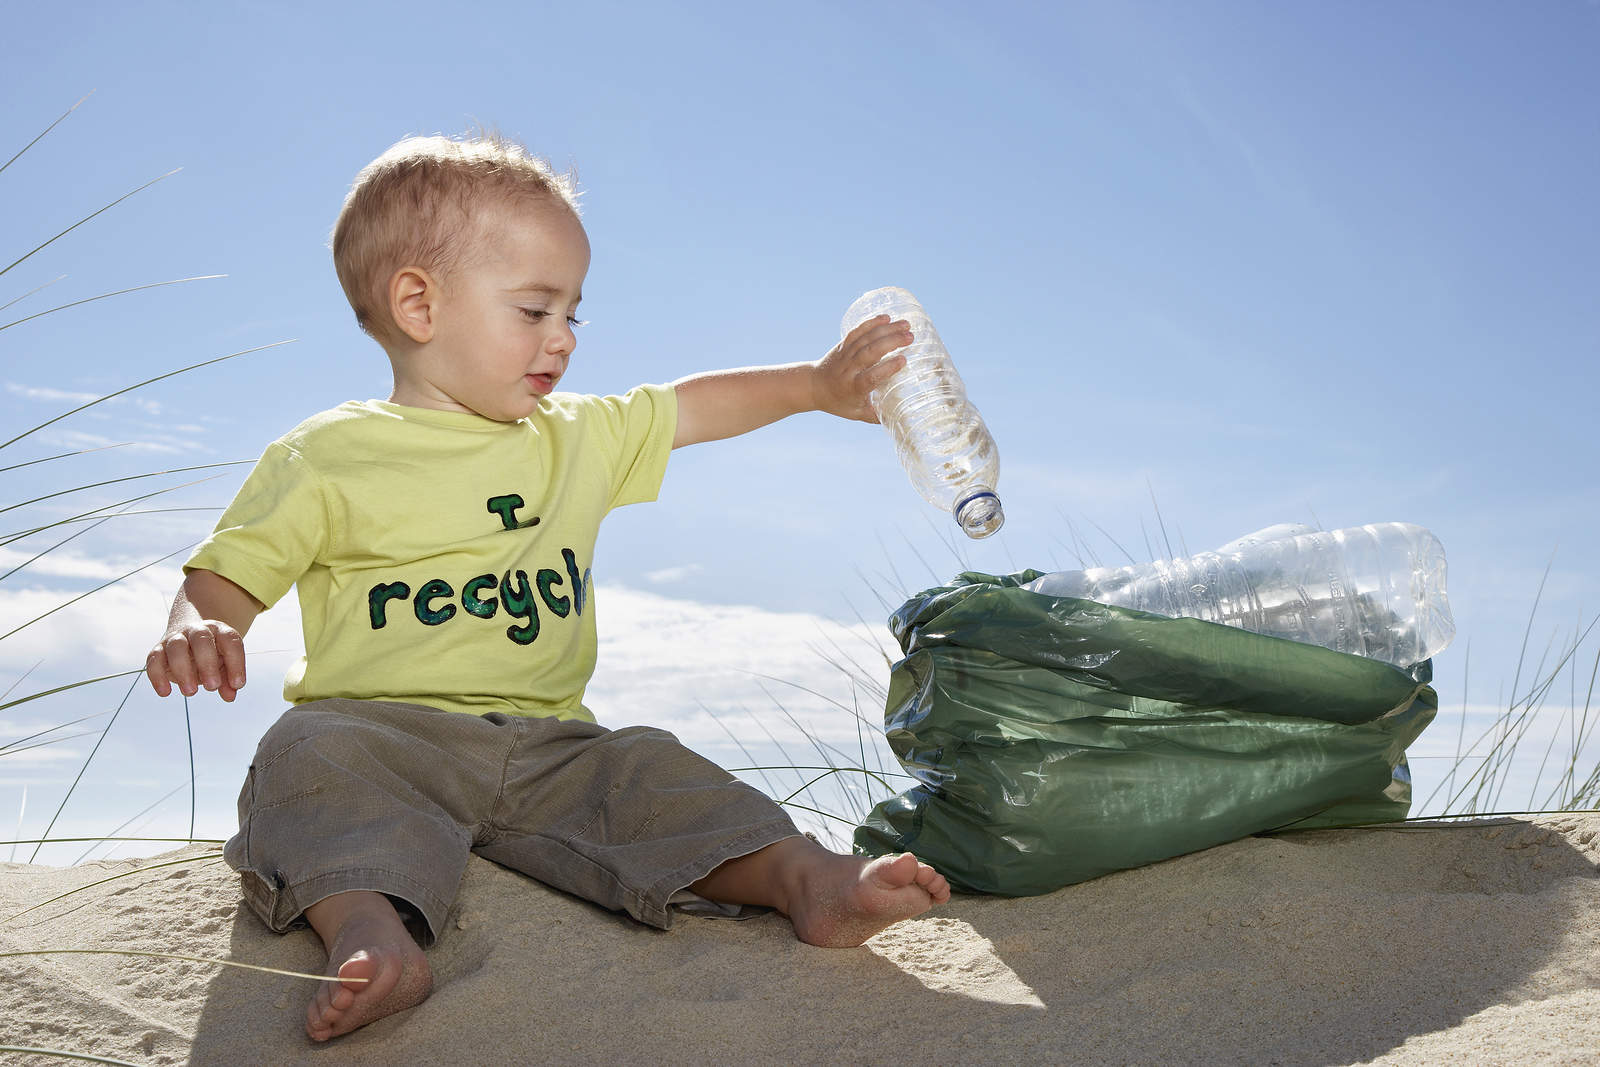 https://www.campliveoakfl.com/wp-content/uploads/2016/05/Child-Recycling.jpg